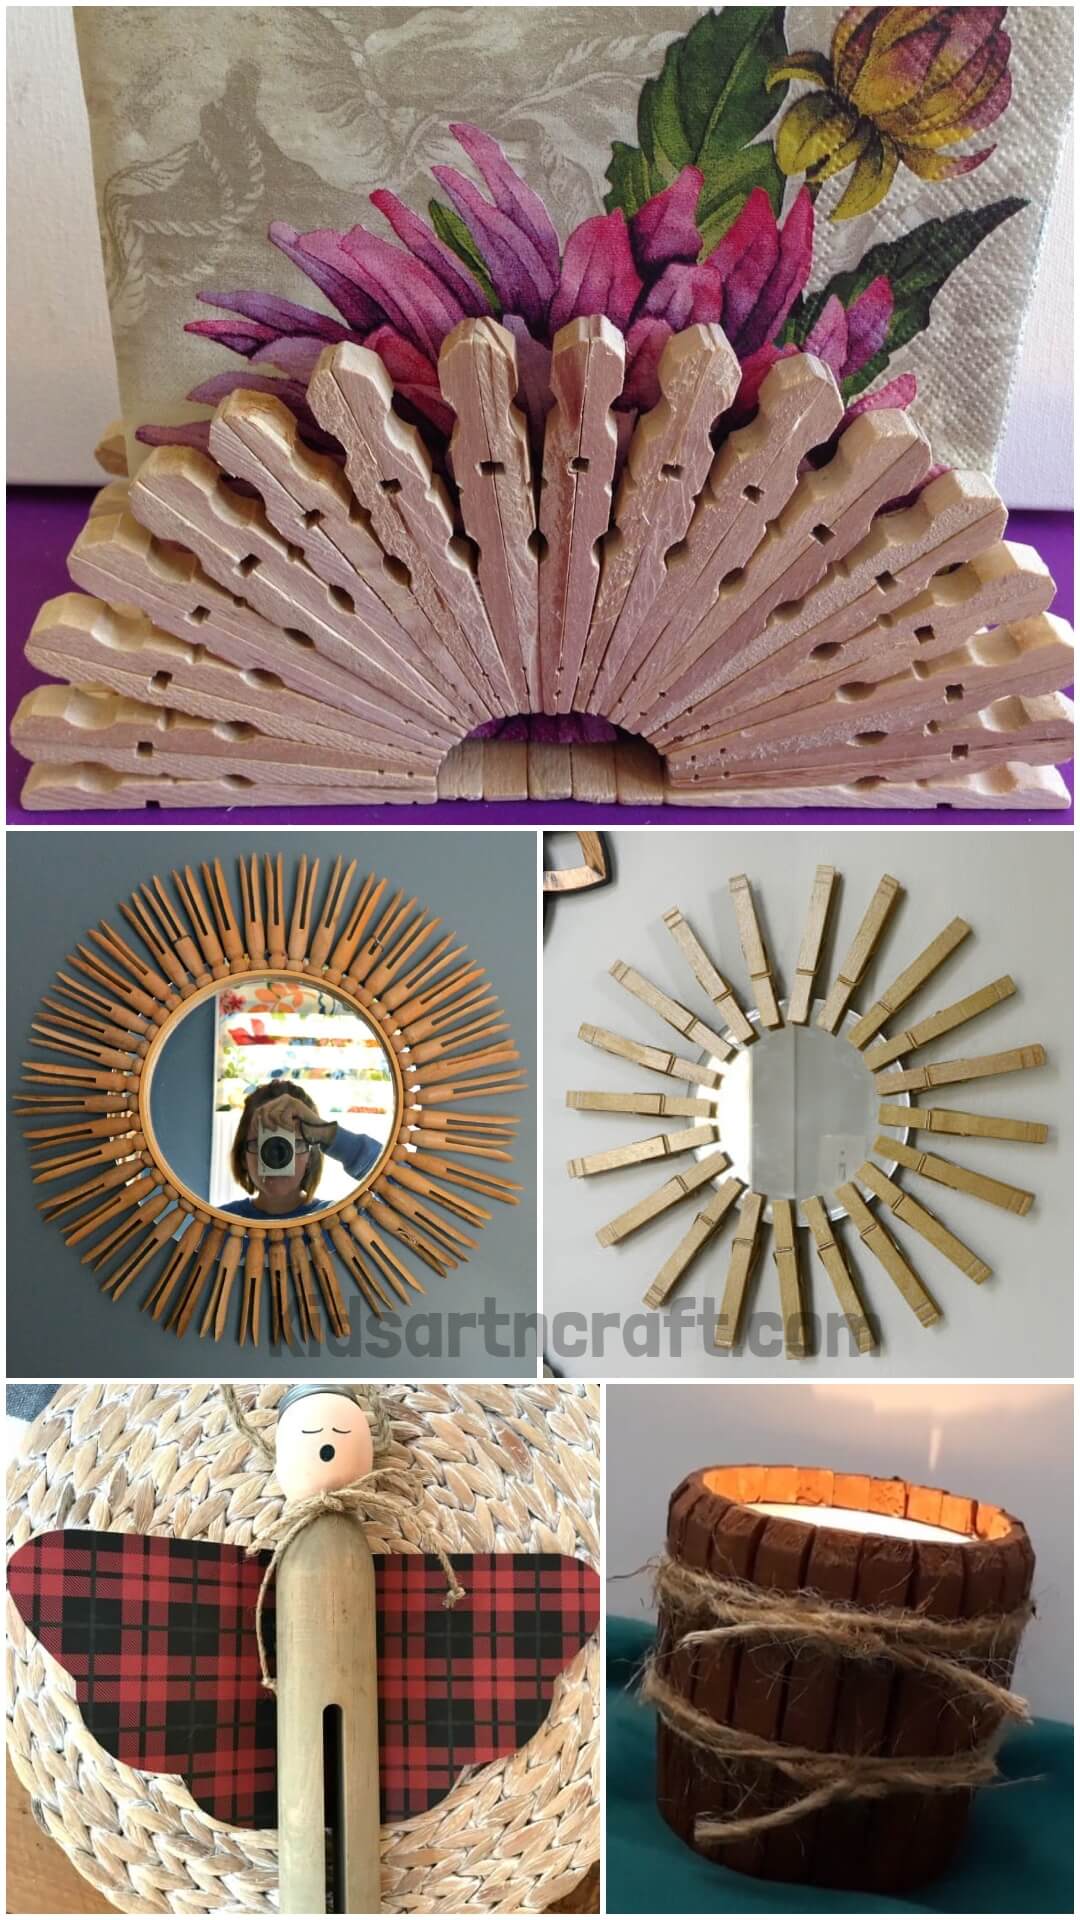 Vintage clothespin crafts